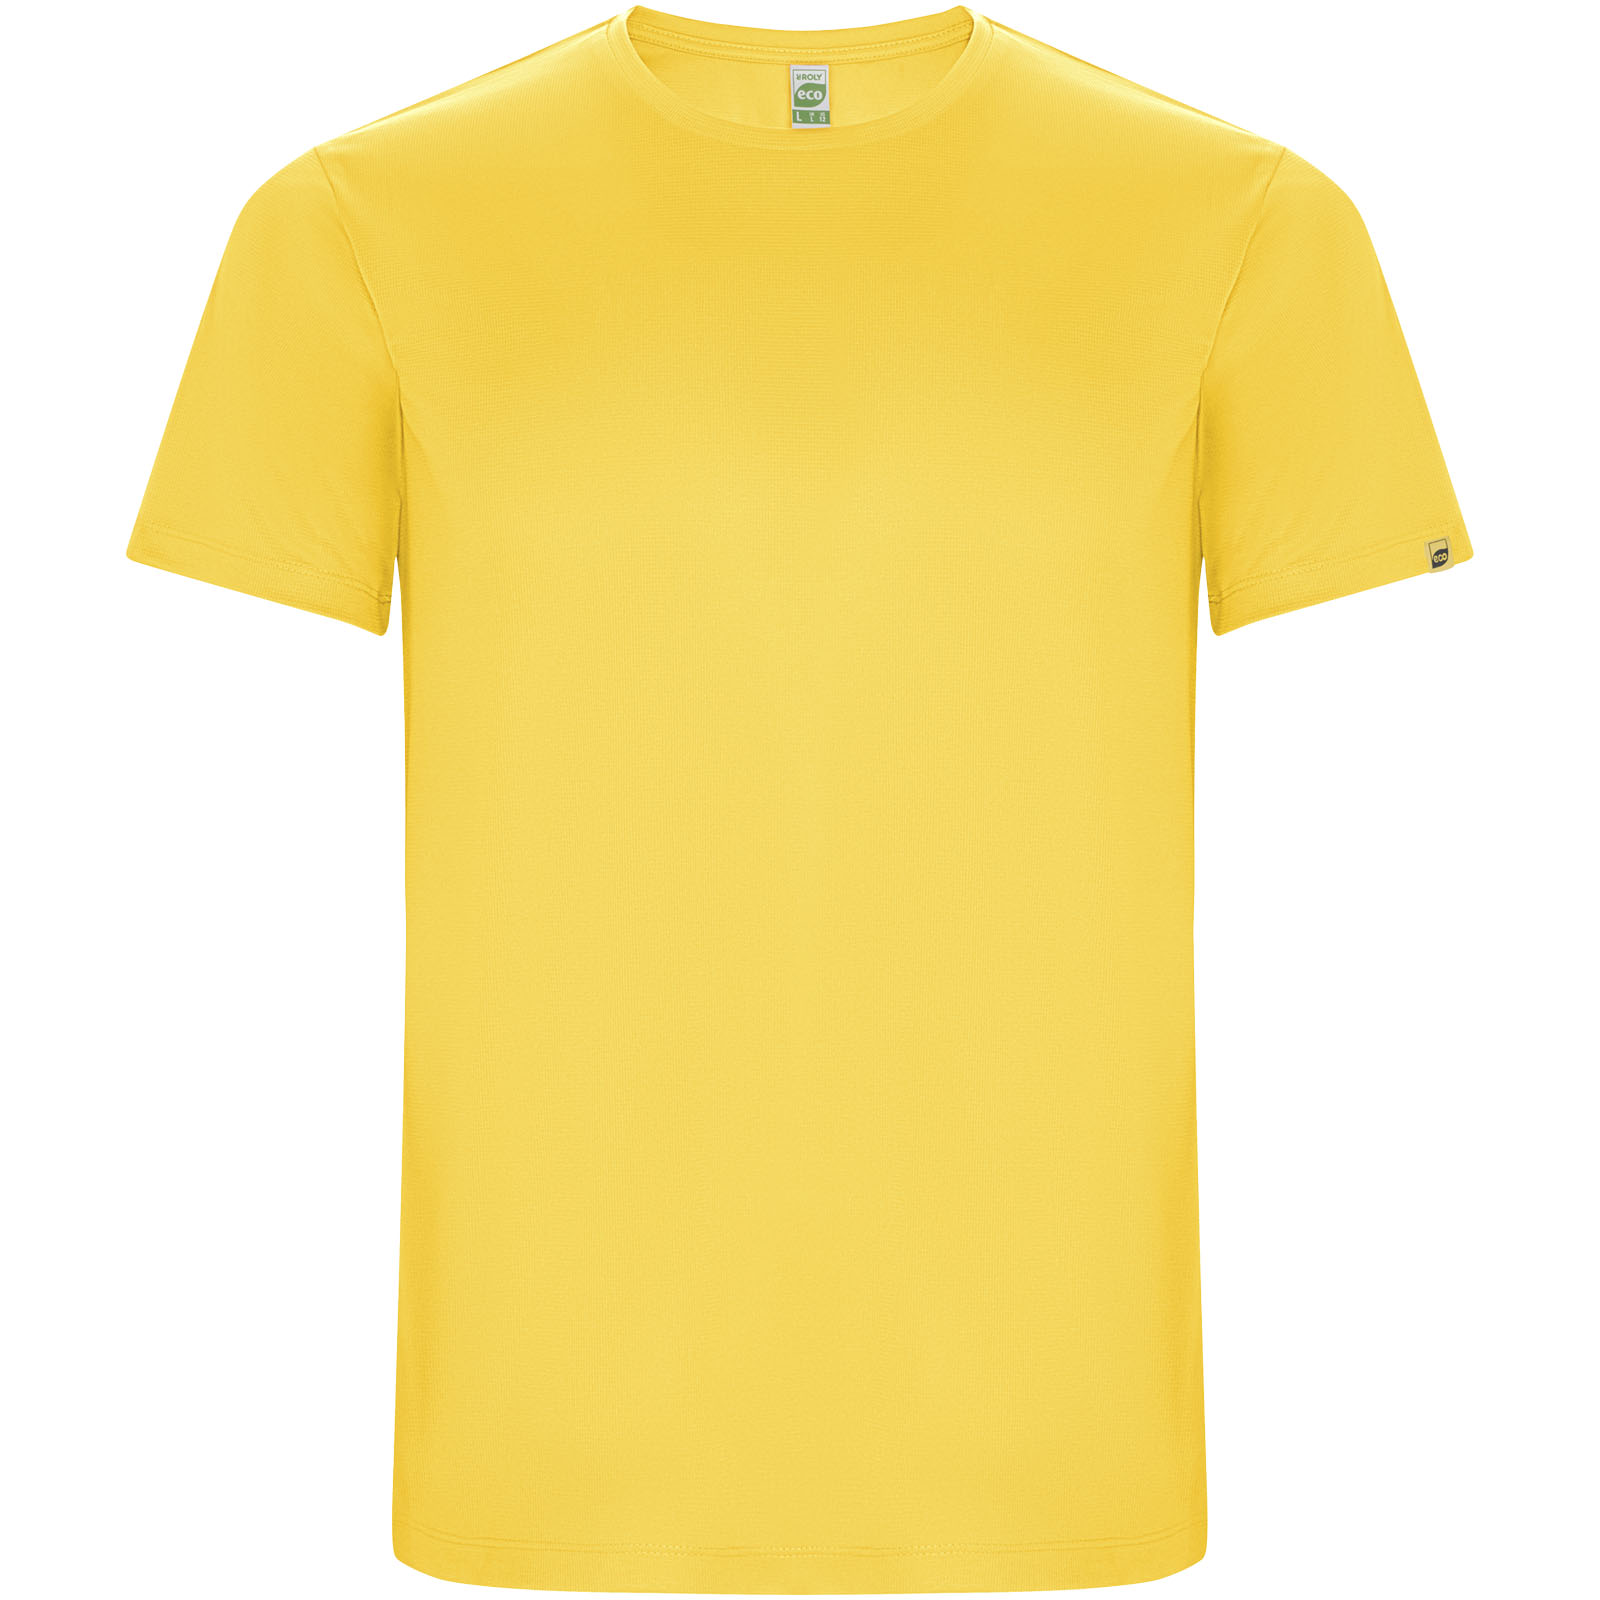 Clothing - Imola short sleeve men's sports t-shirt